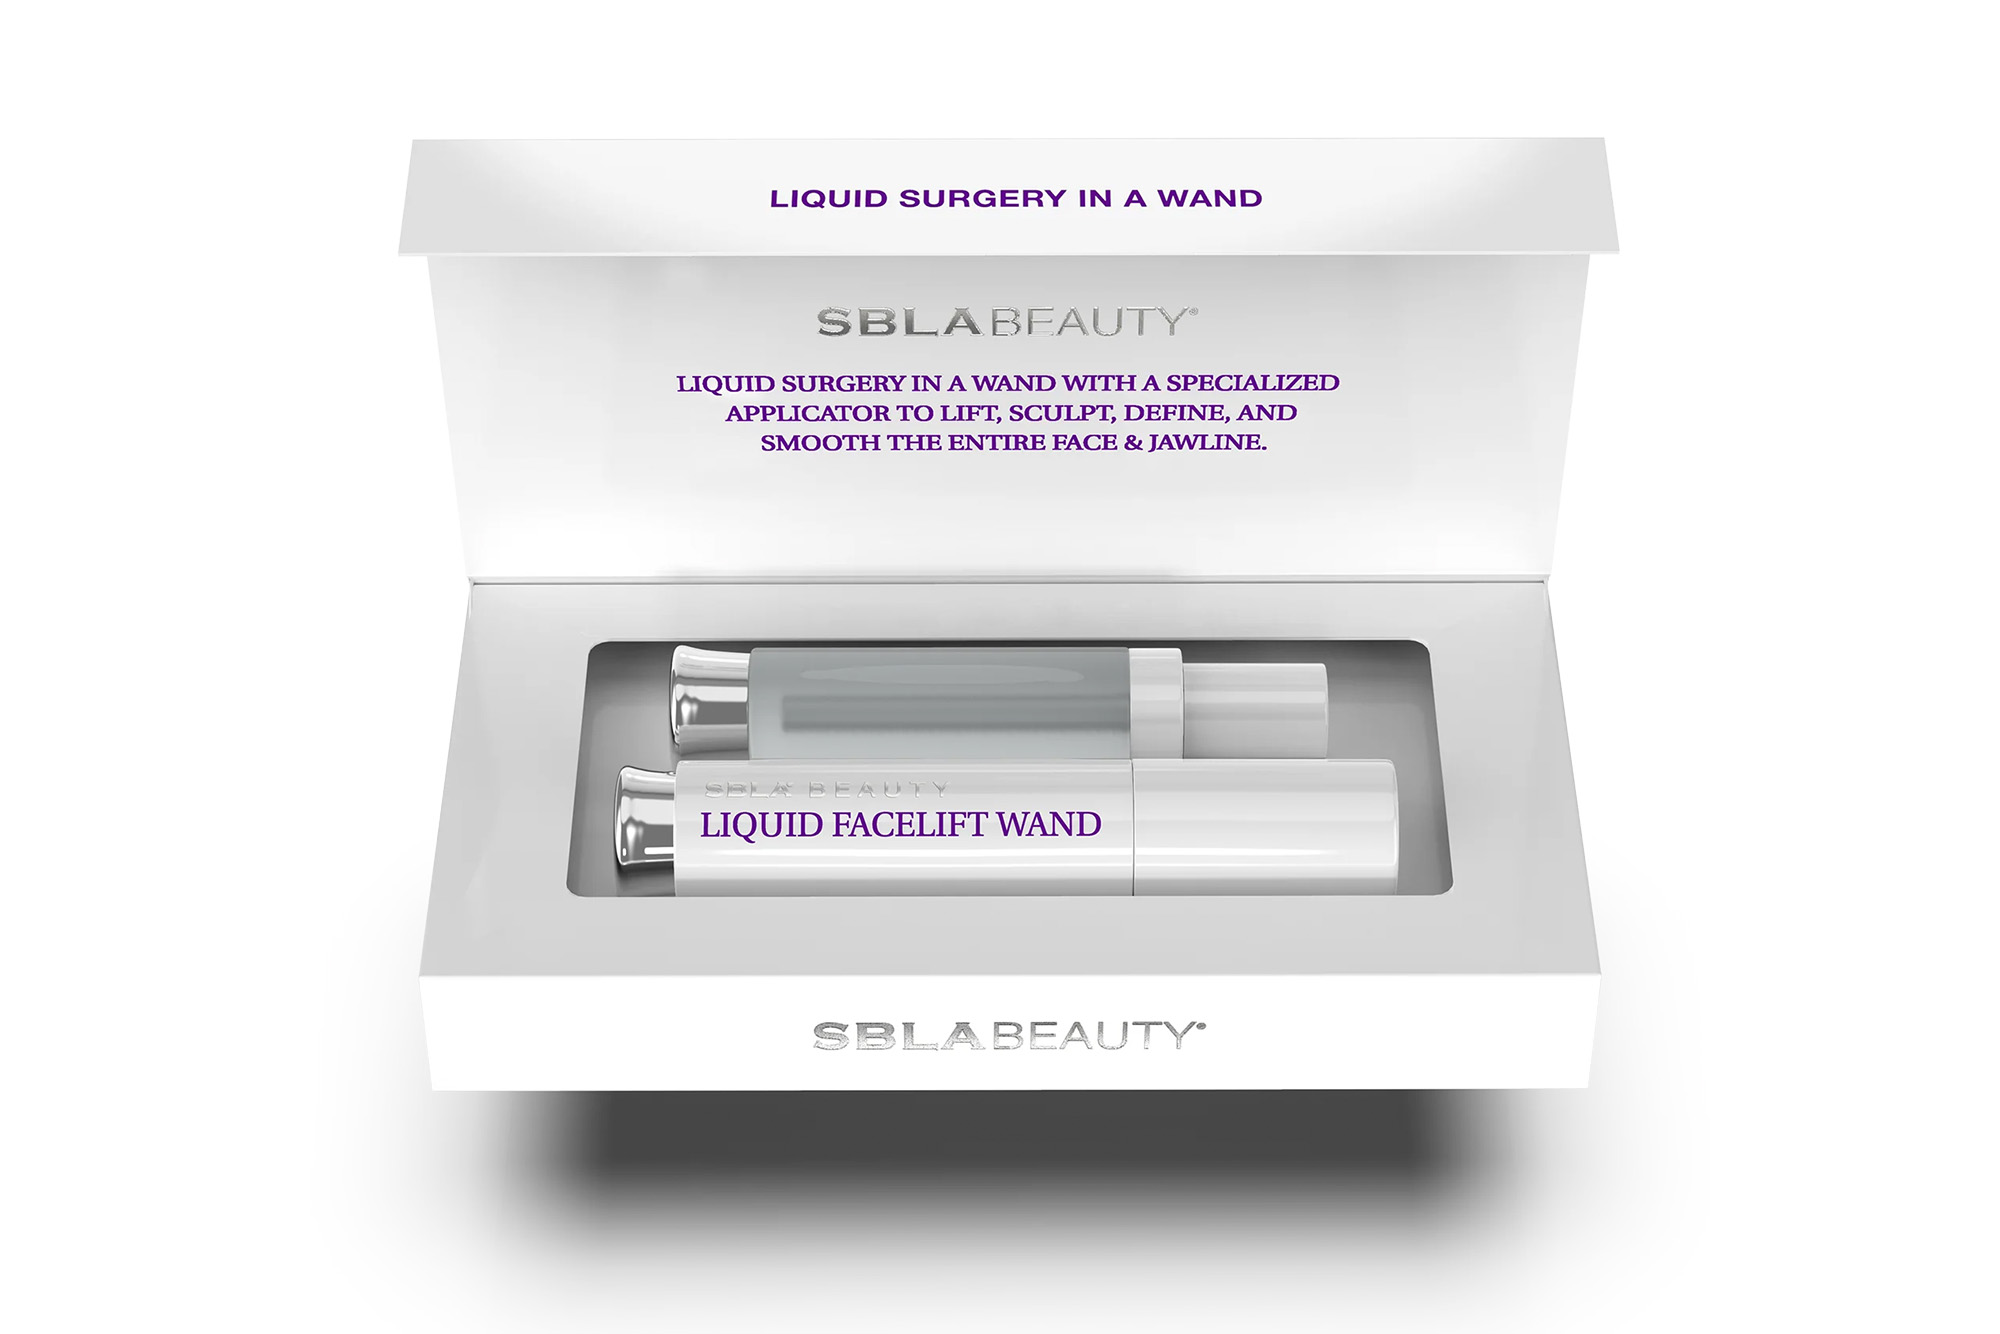 SBLA Beauty face wand in a box